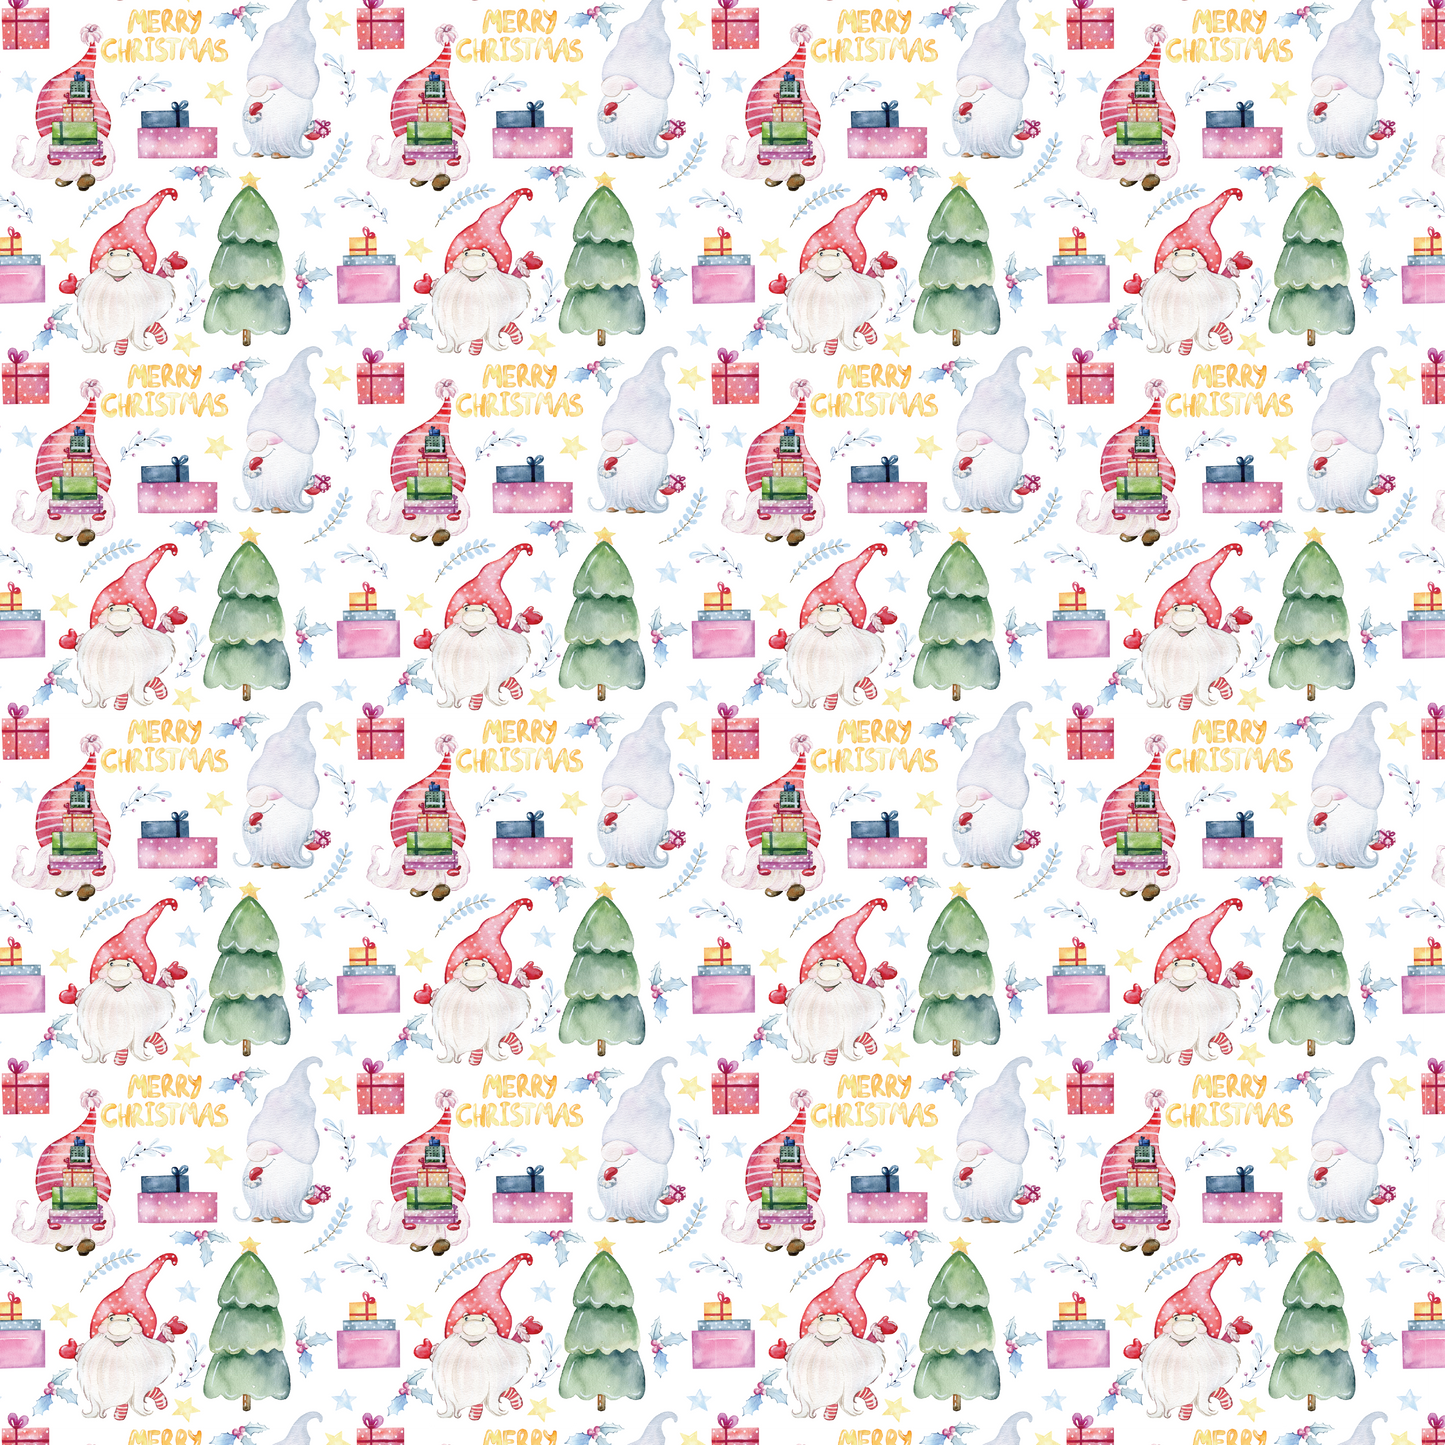 Gnome Time Like Christmas - Gnomes and Trees 004